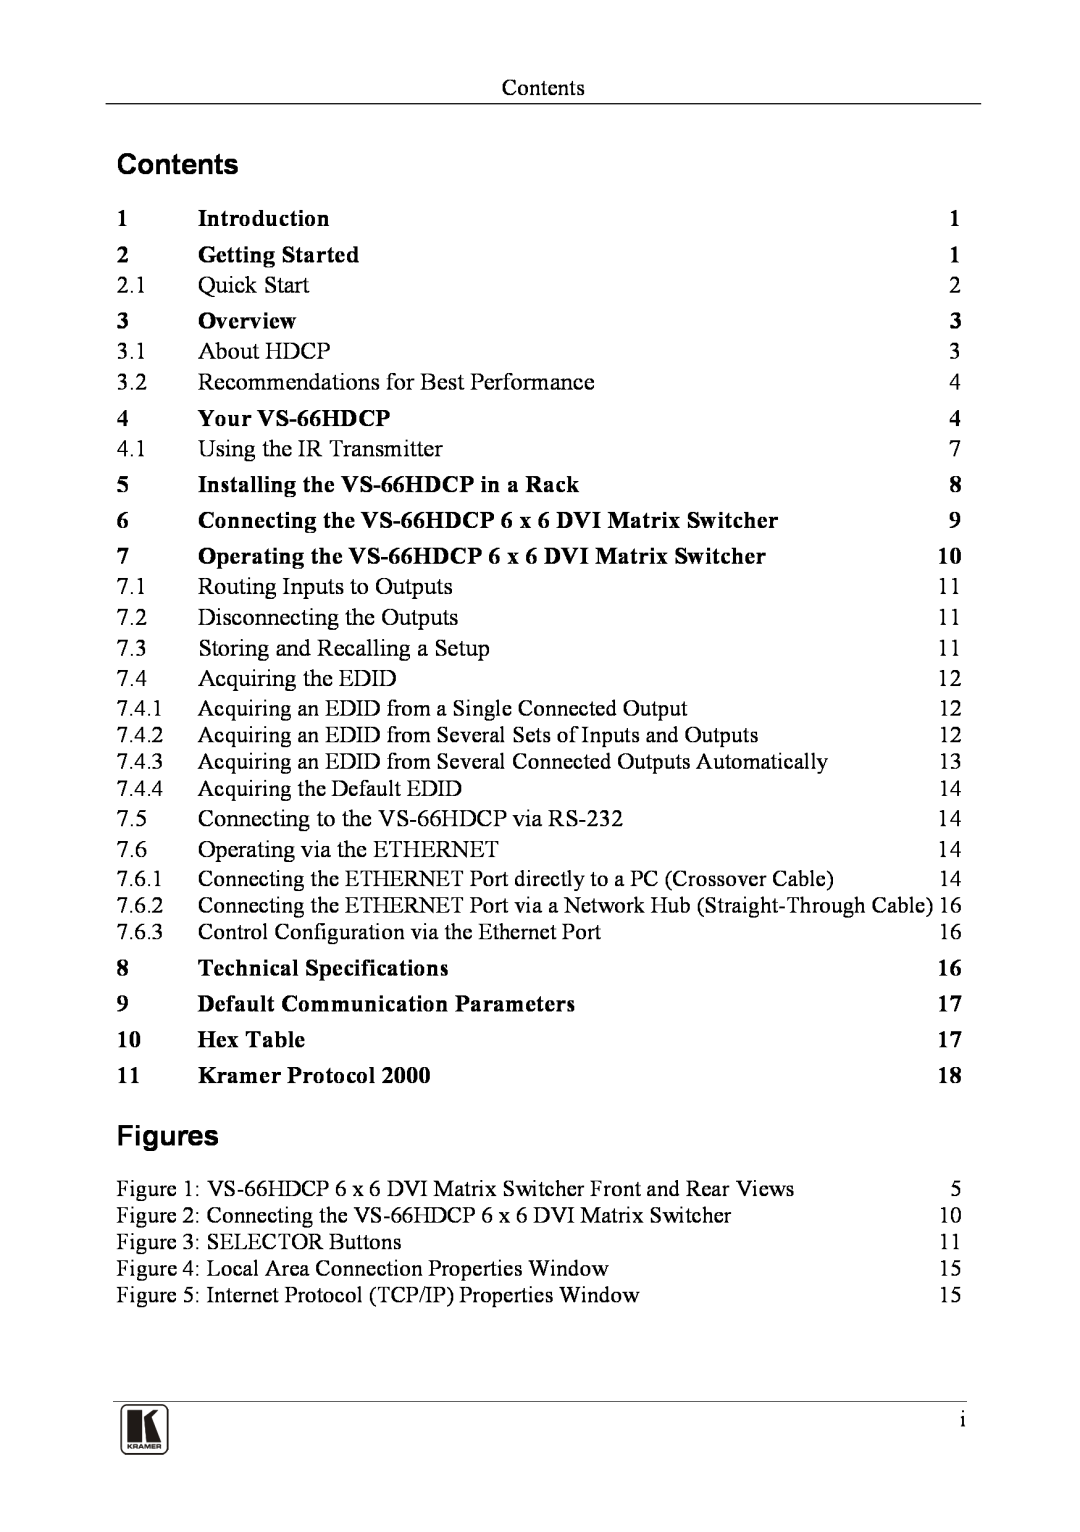 Kramer Electronics VS-66hdcp user manual Contents, Figures 